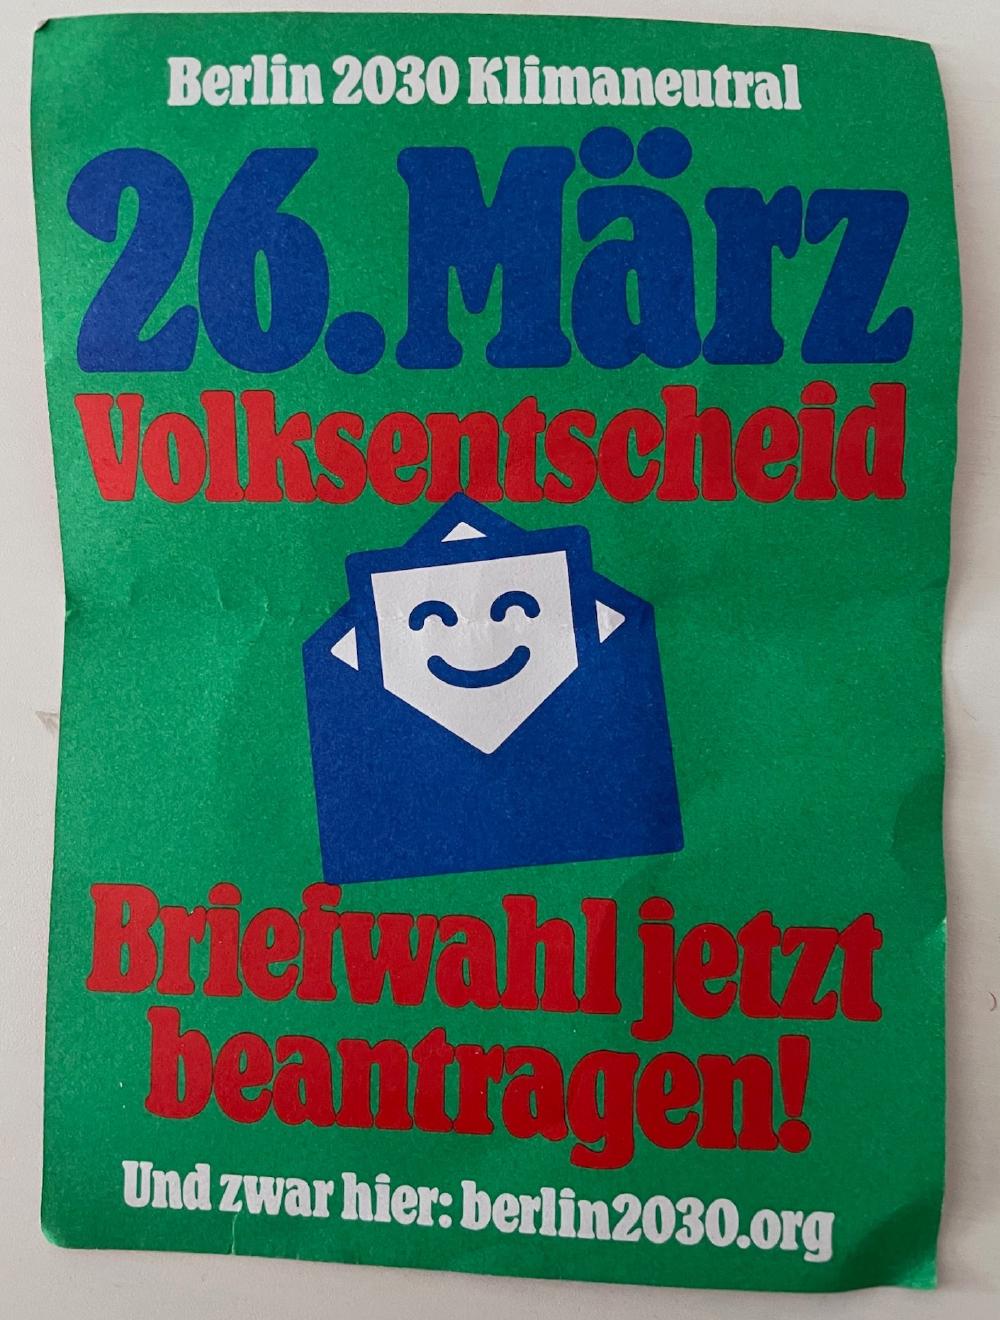 A flyer for the 2030 Berlin Klimavolksentscheid